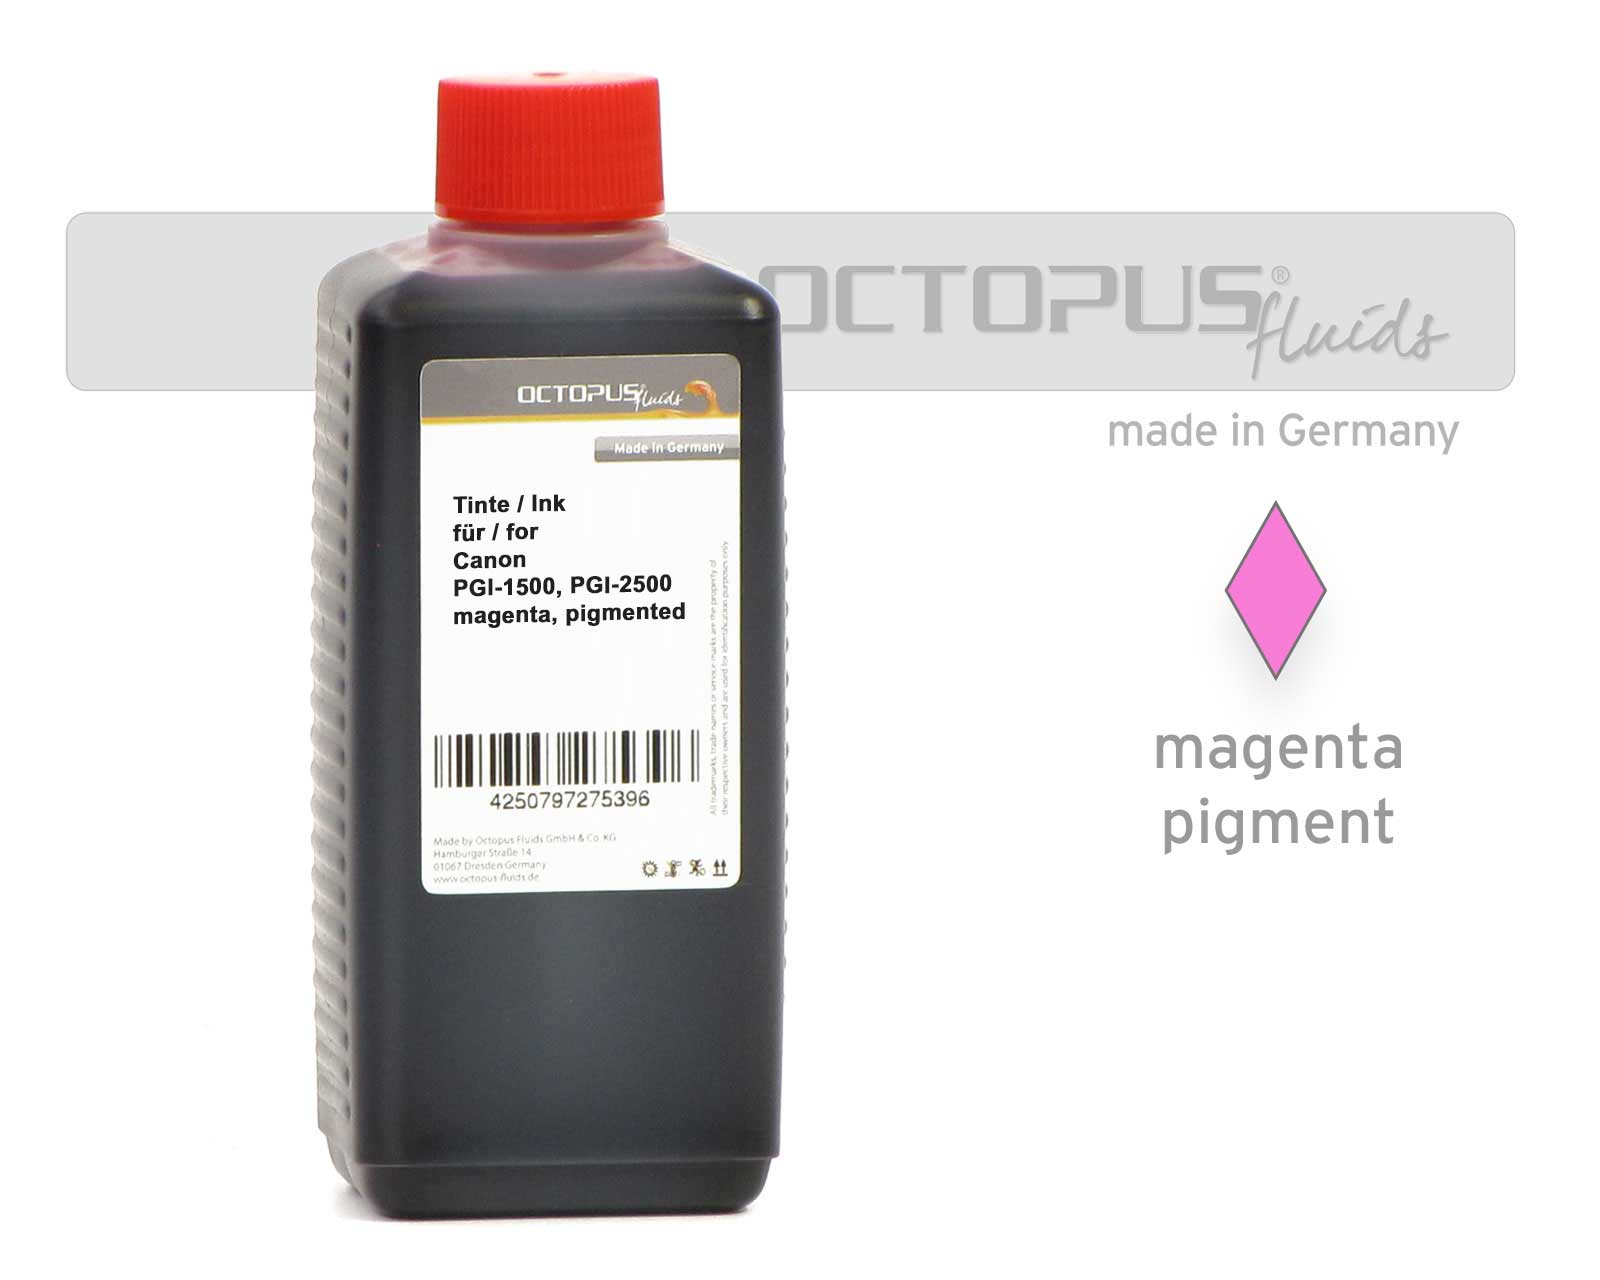 
Refill ink for Canon PGI-1500, PGI-2500 magenta pigmented